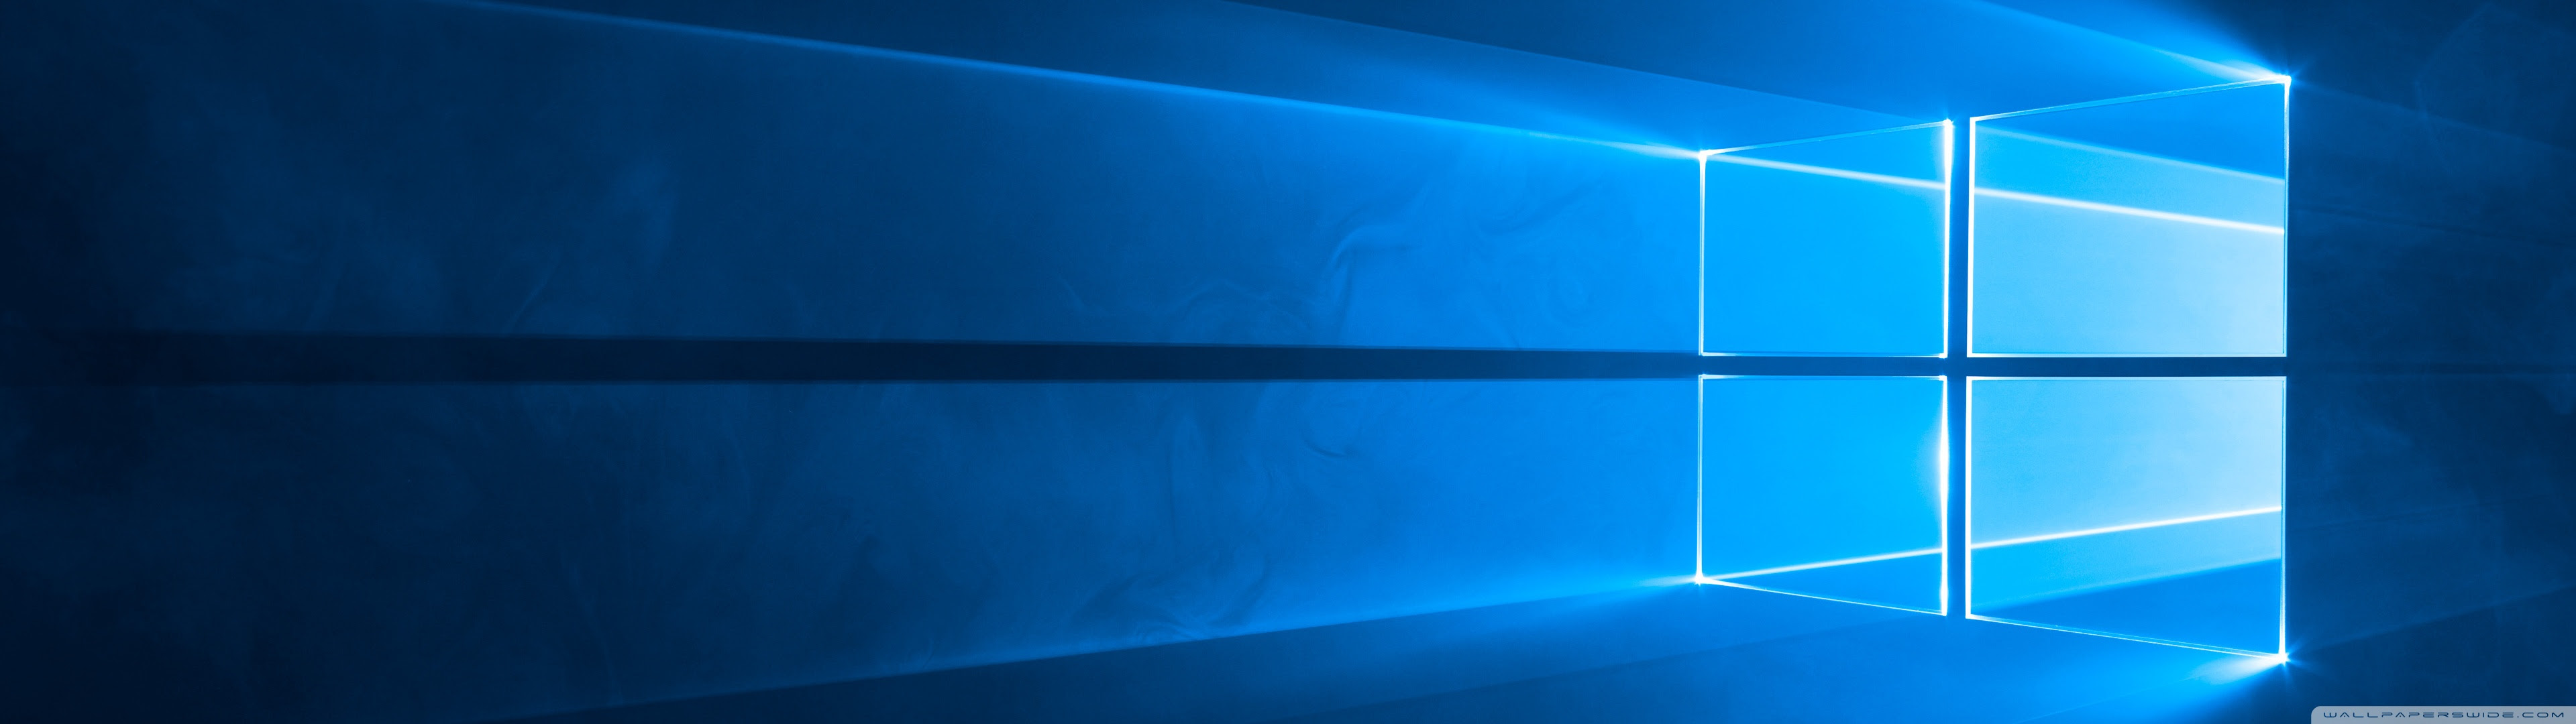 Windows Desktop Backgrounds Windows Desktop Backgrounds Dual Monitor